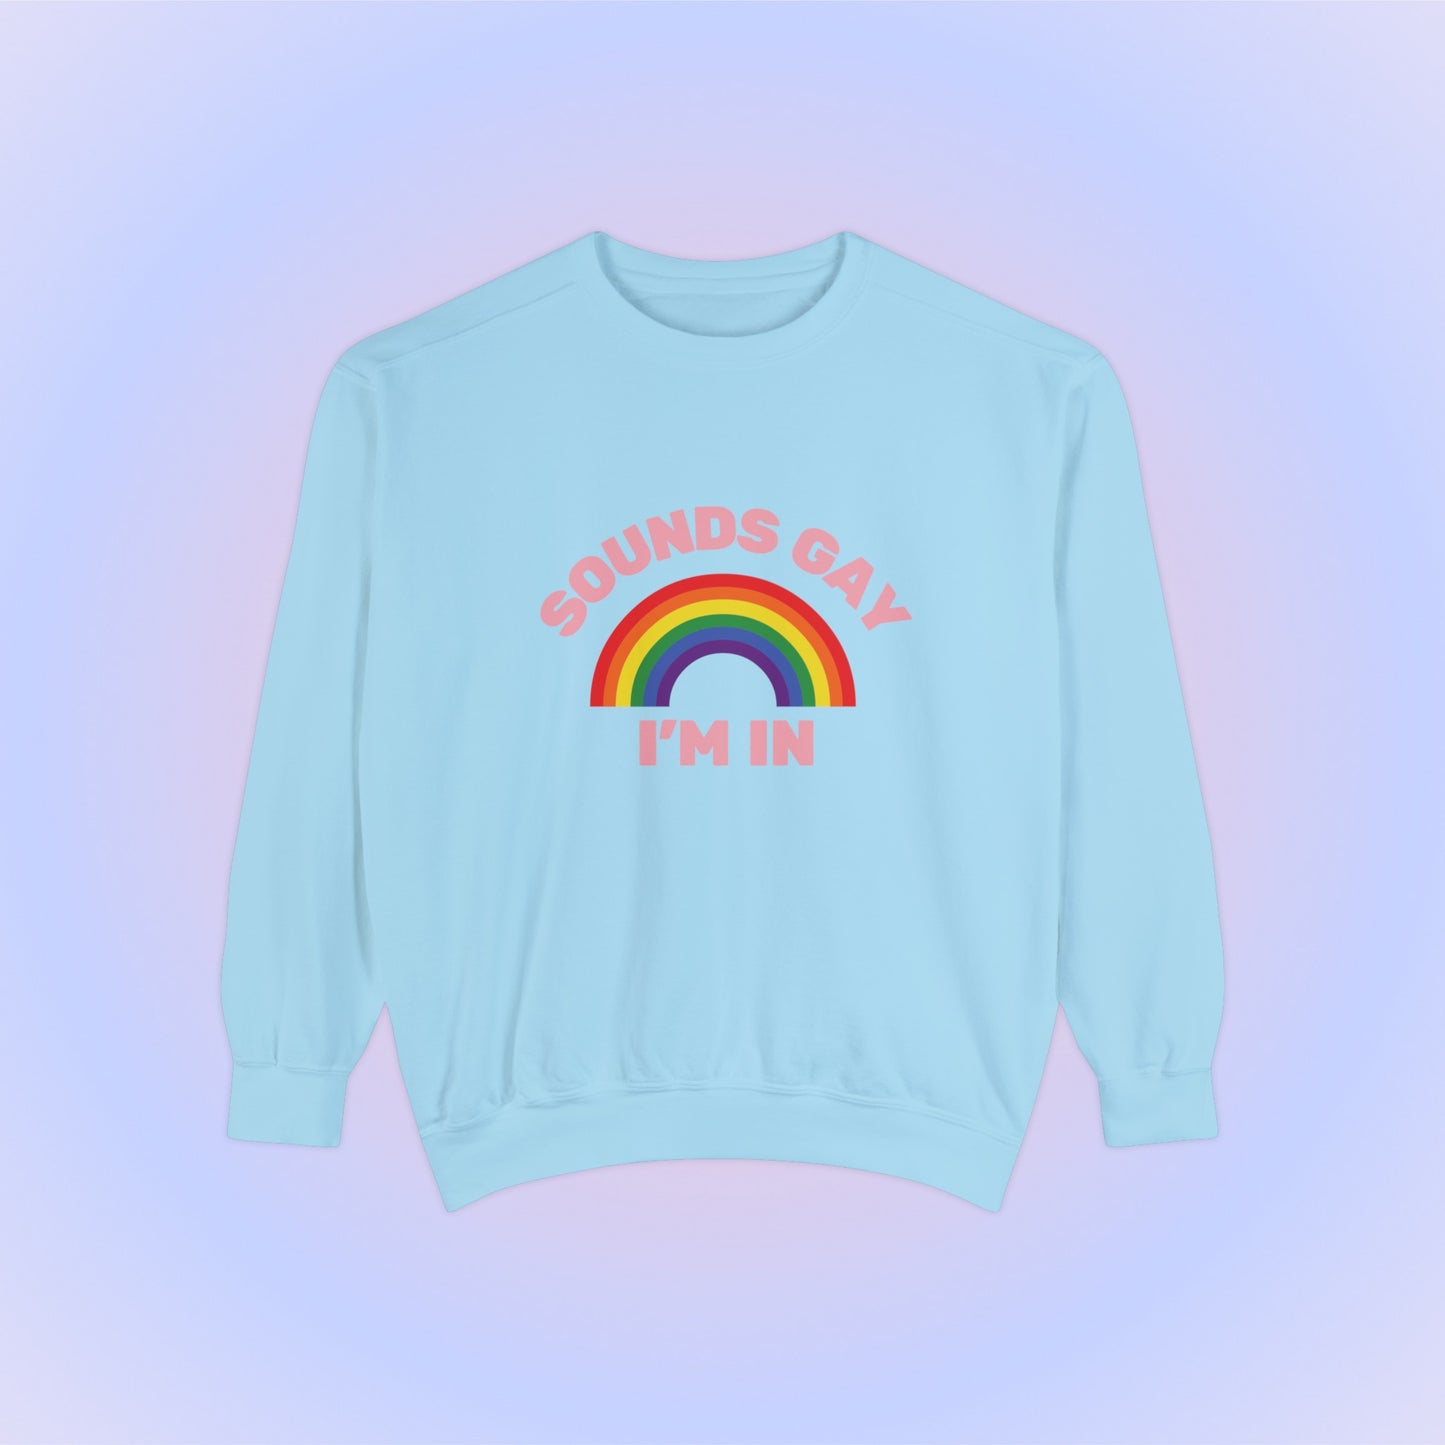 Sounds Gay Im In Crewneck Sweatshirt